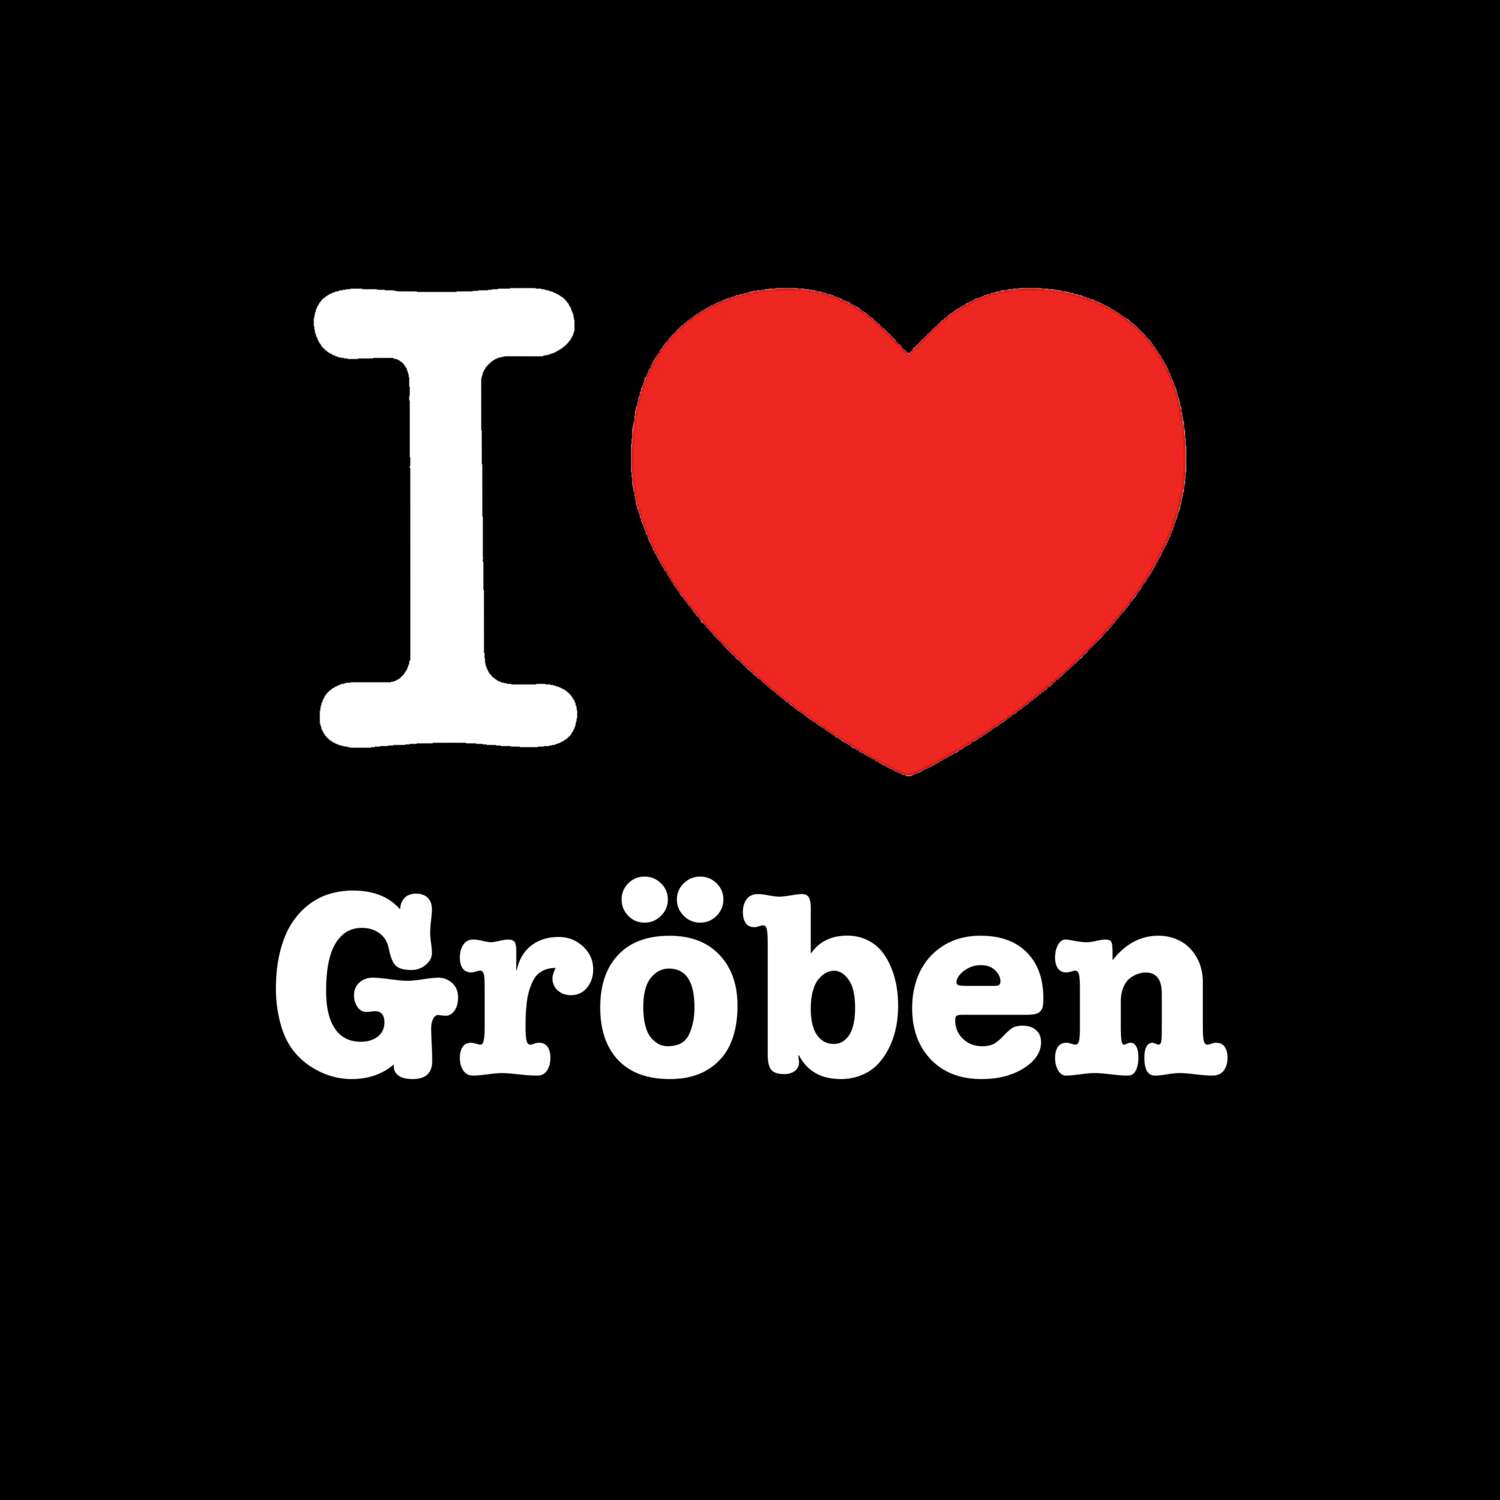 Gröben T-Shirt »I love«